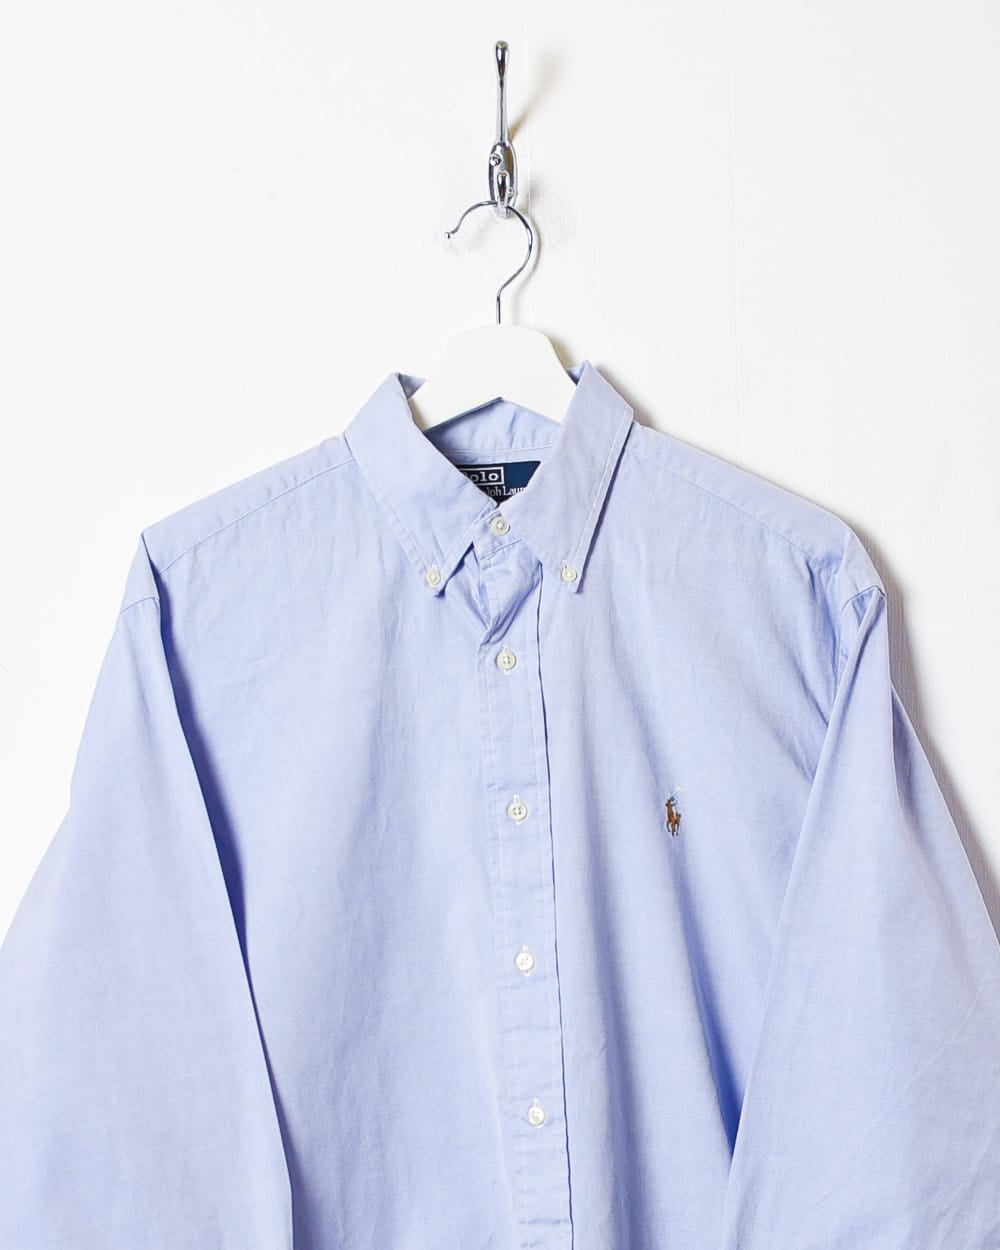 BabyBlue Polo Ralph Lauren Shirt - Large